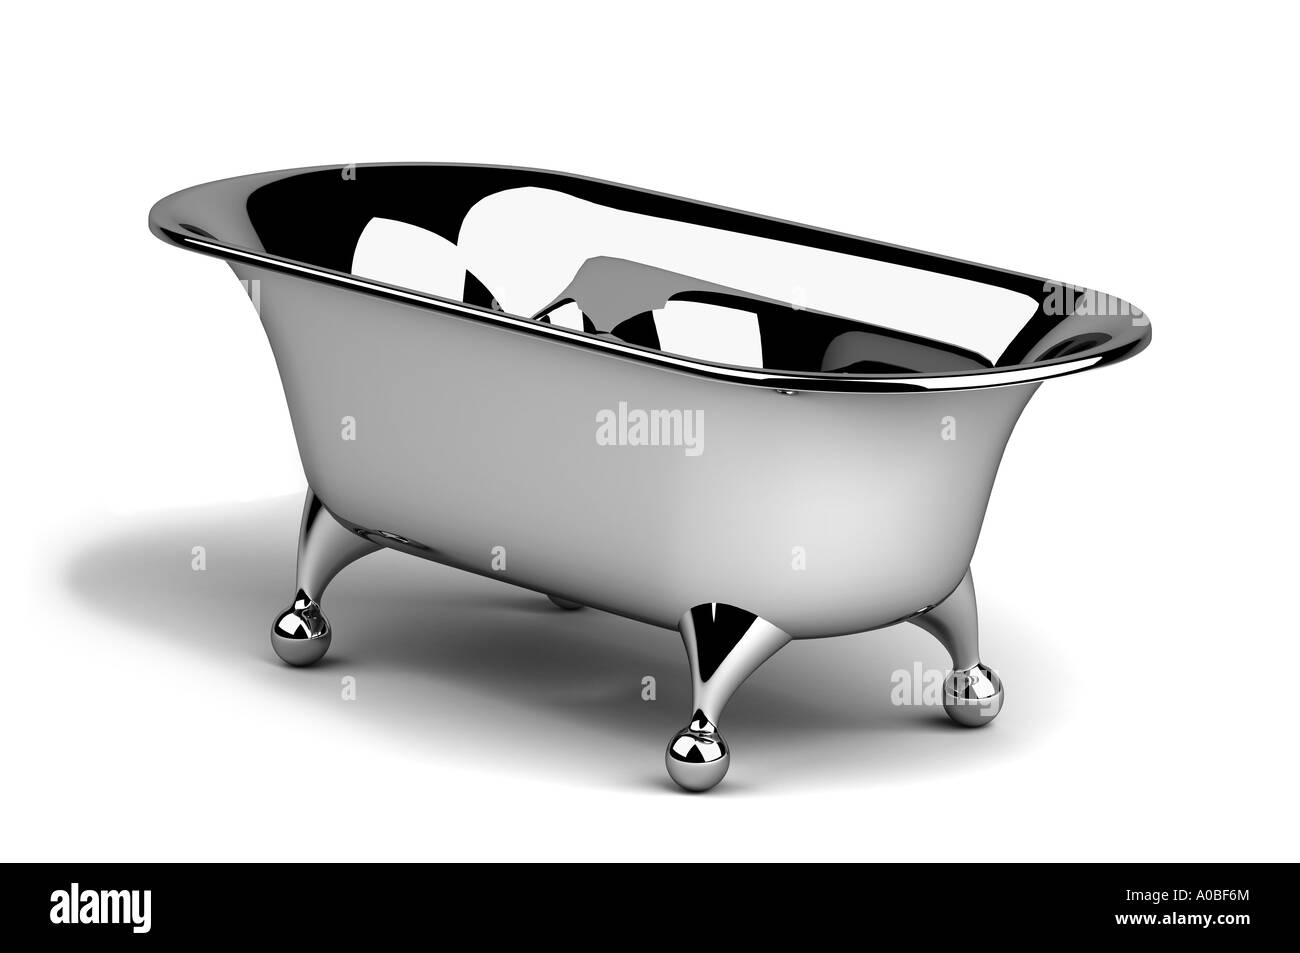 Bath tub Stock Photo